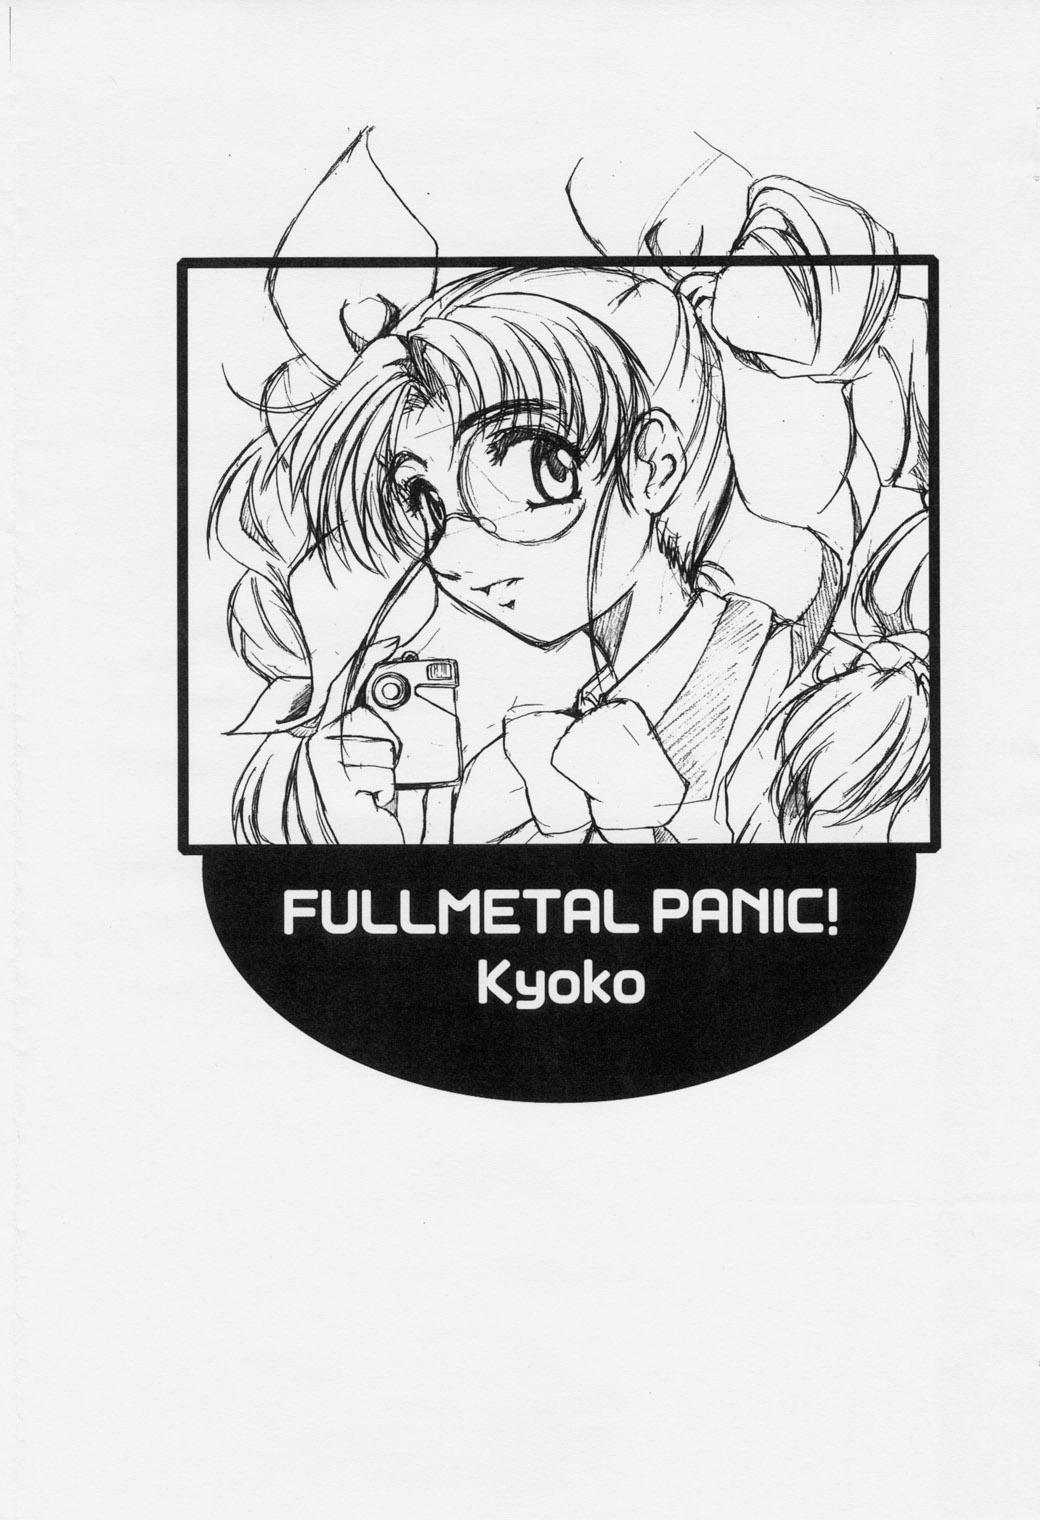 Gostosas FULLMETAL PANIC! Kyoko - Full metal panic Italiano - Picture 1